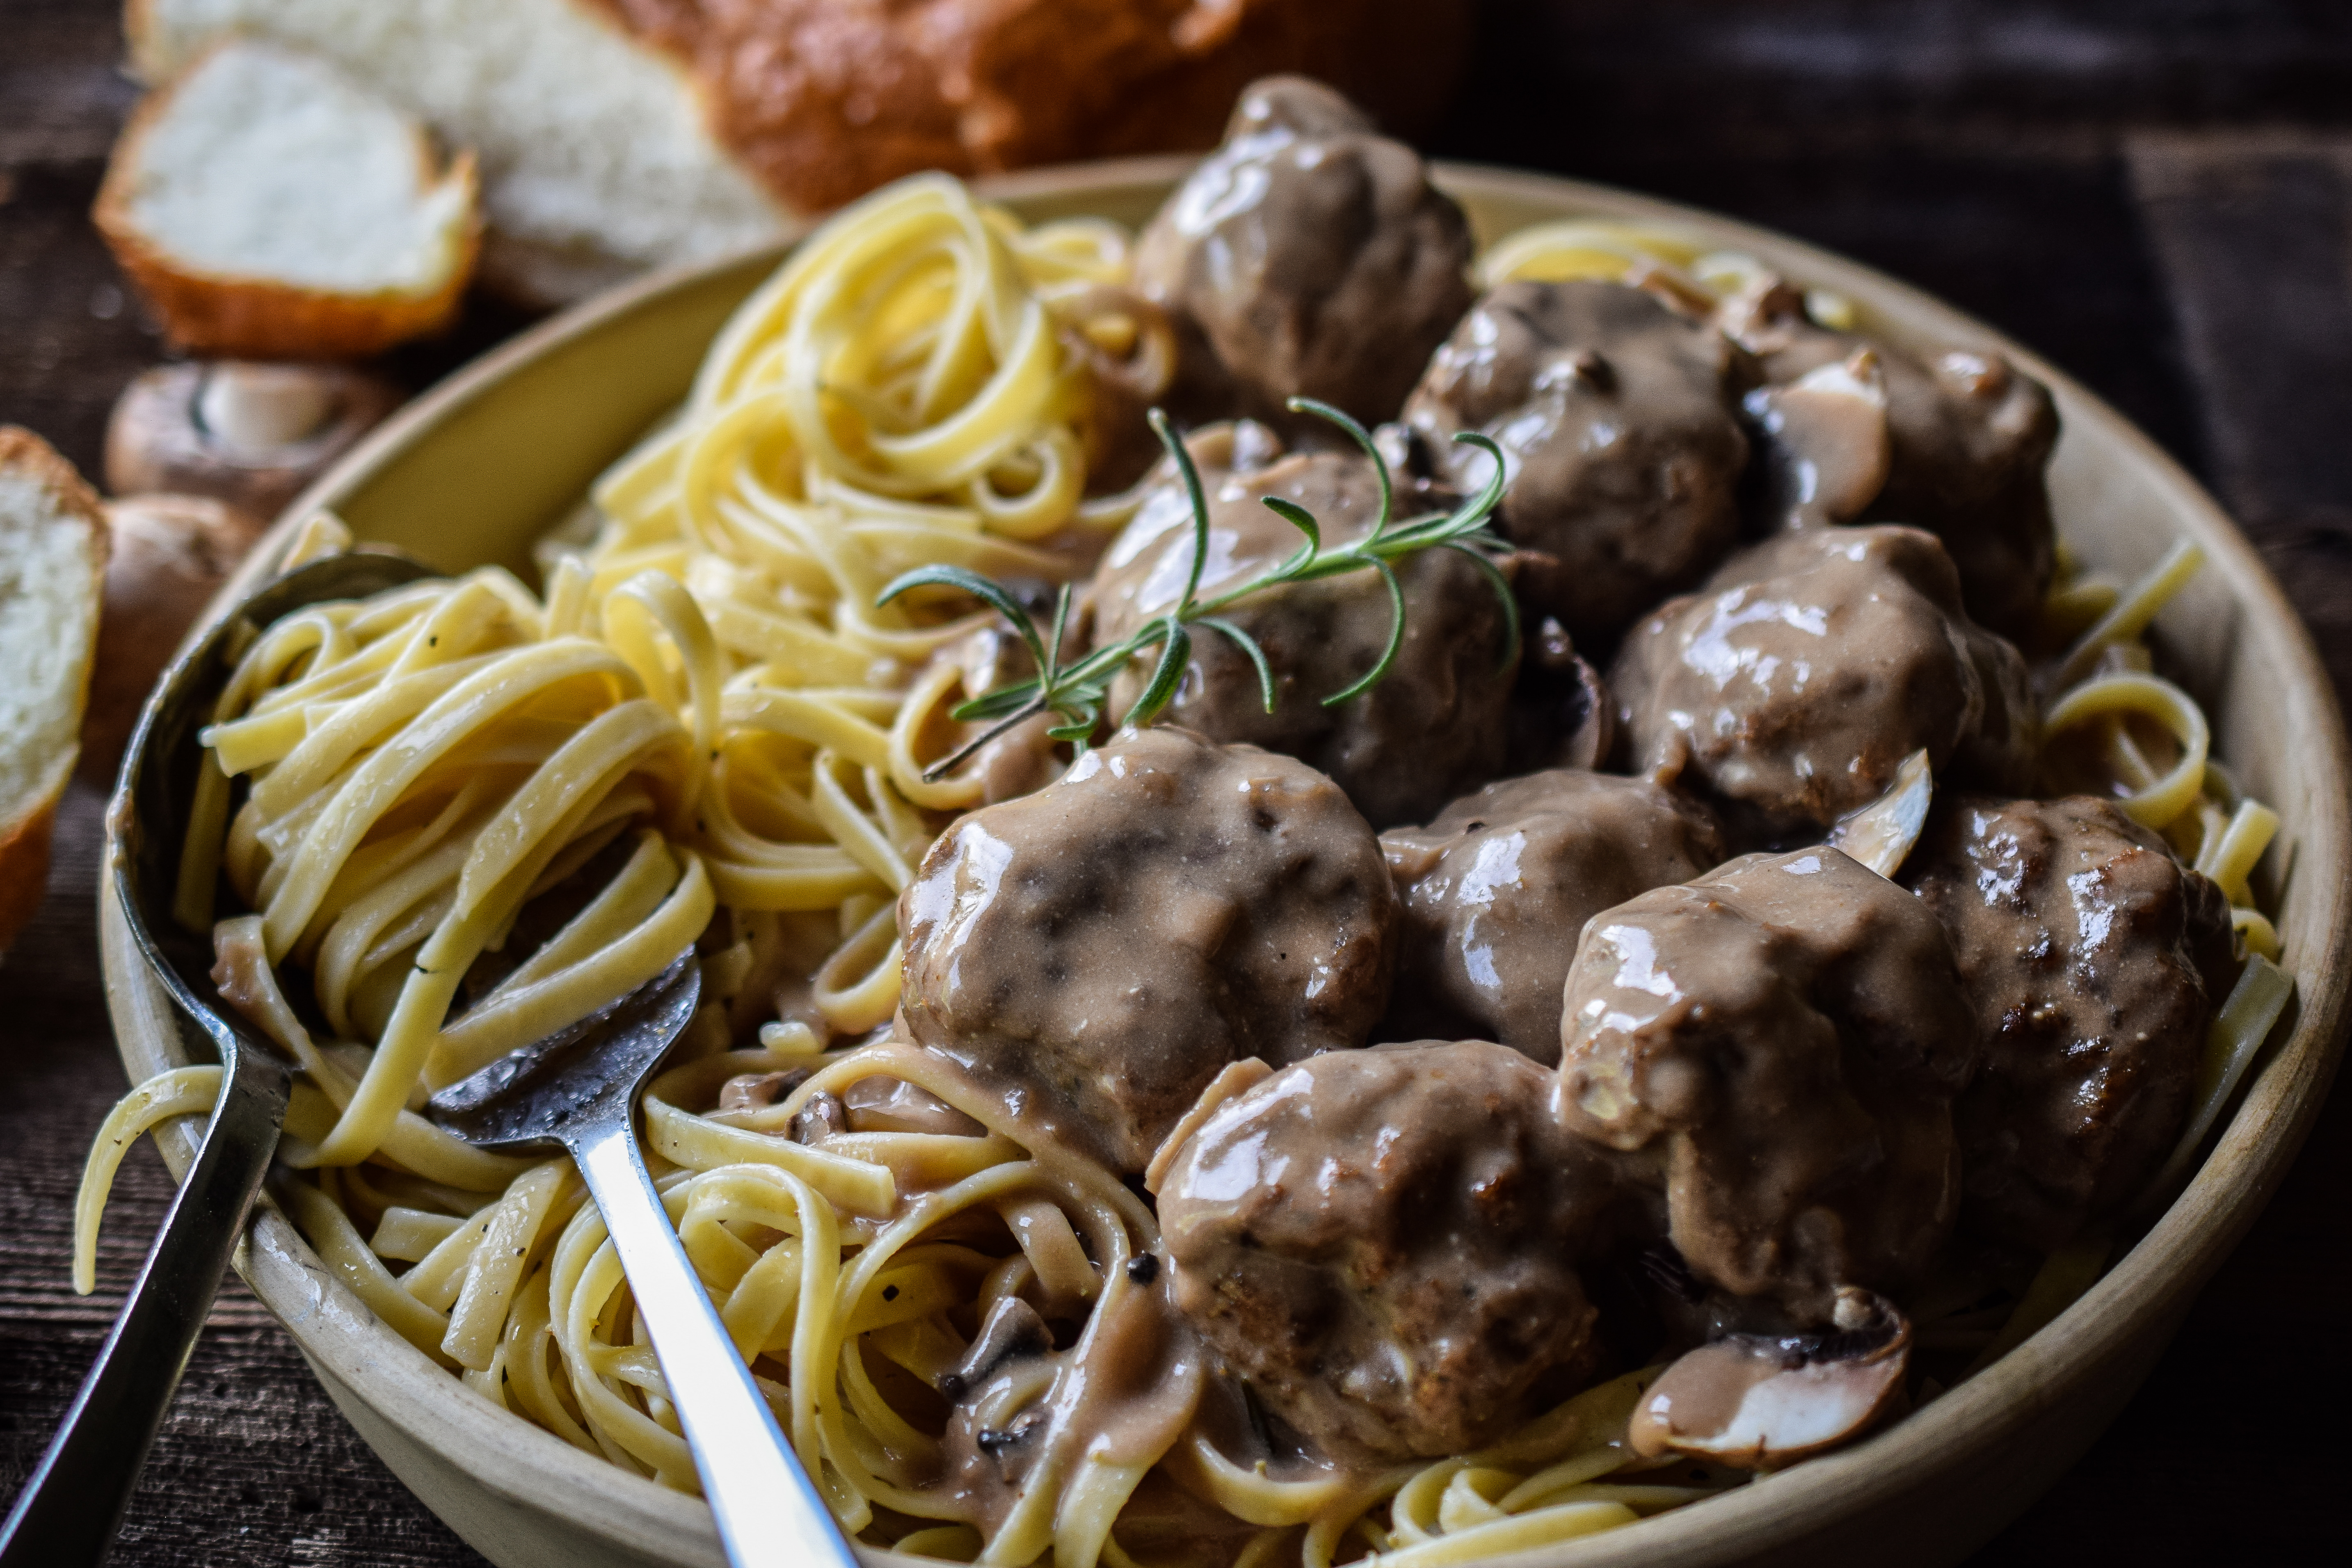 Meatballs in a mushroom gravy with pasta.